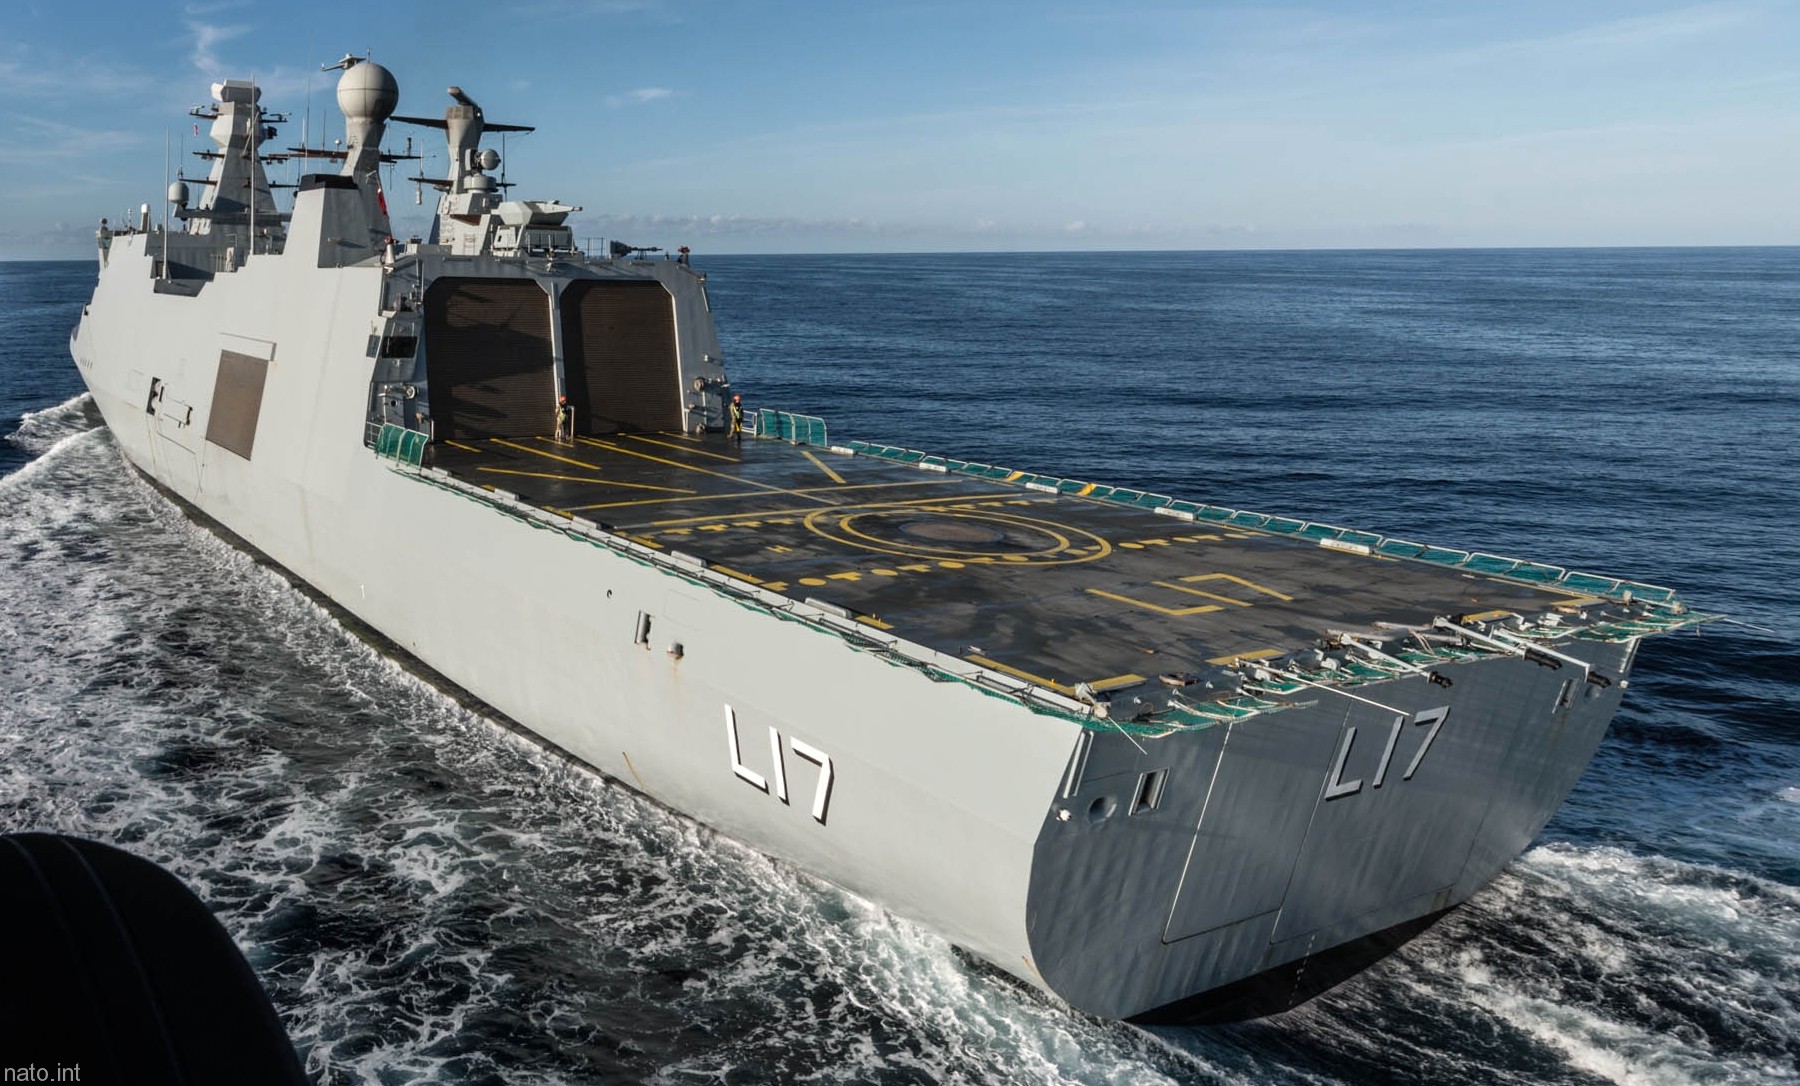 f-342 hdms esbern snare l-17 frigate command support ship royal danish navy 89